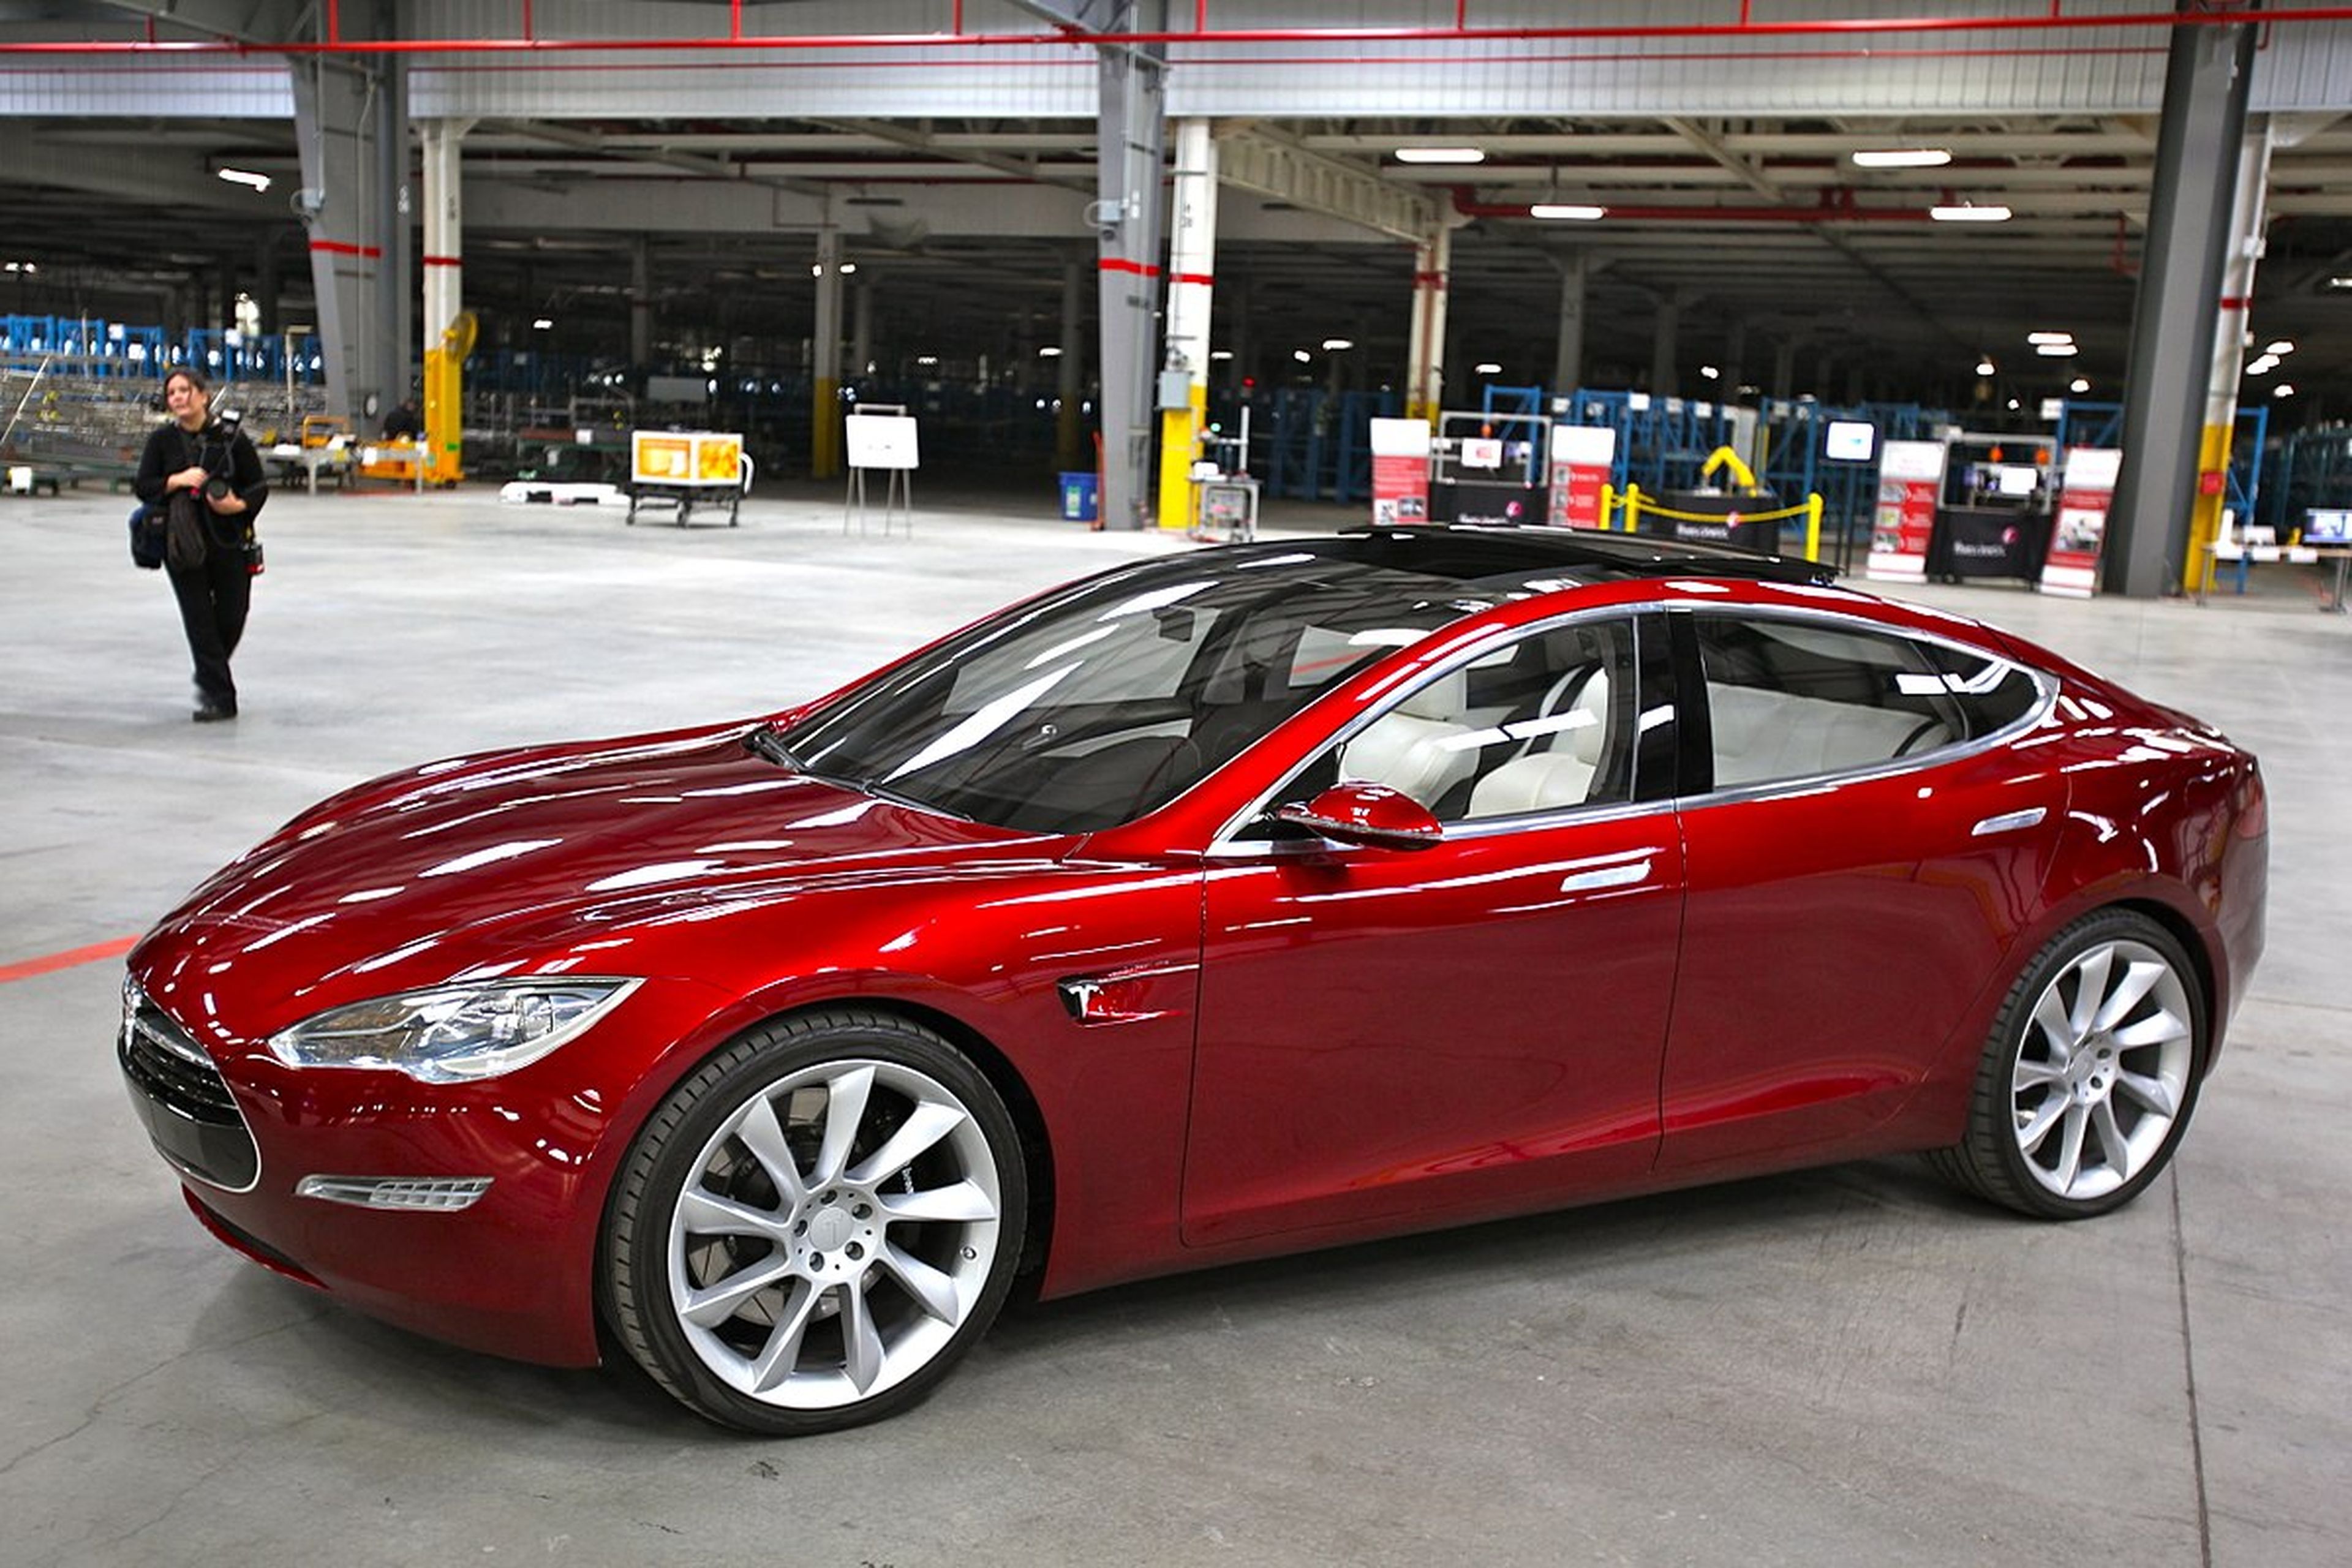 Tesla_Model_S jurvetson via Flickr